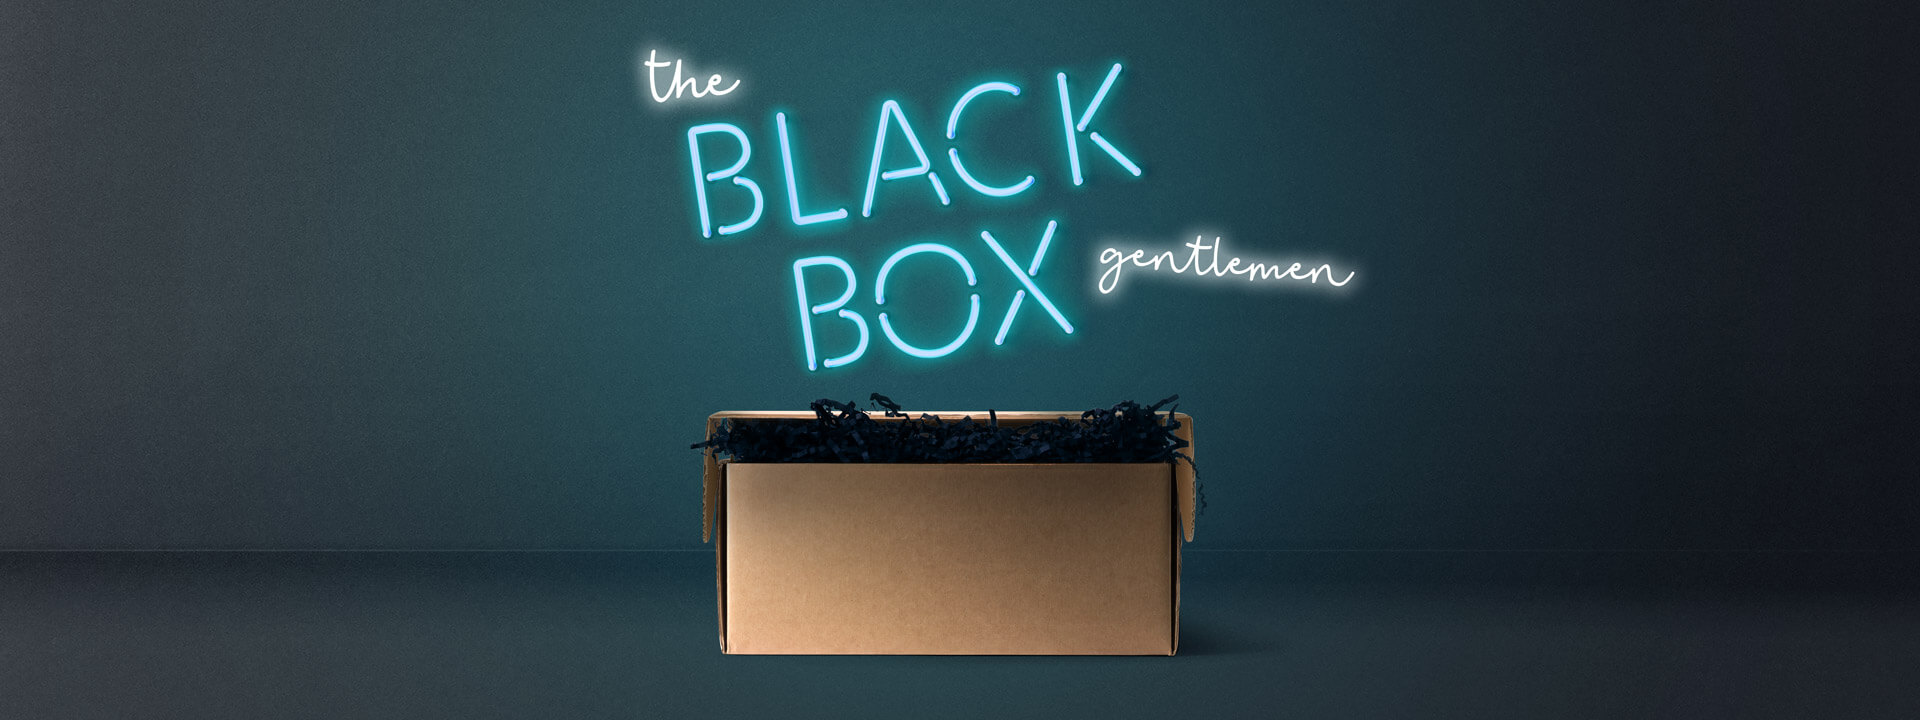 Black Box Gentlemen L